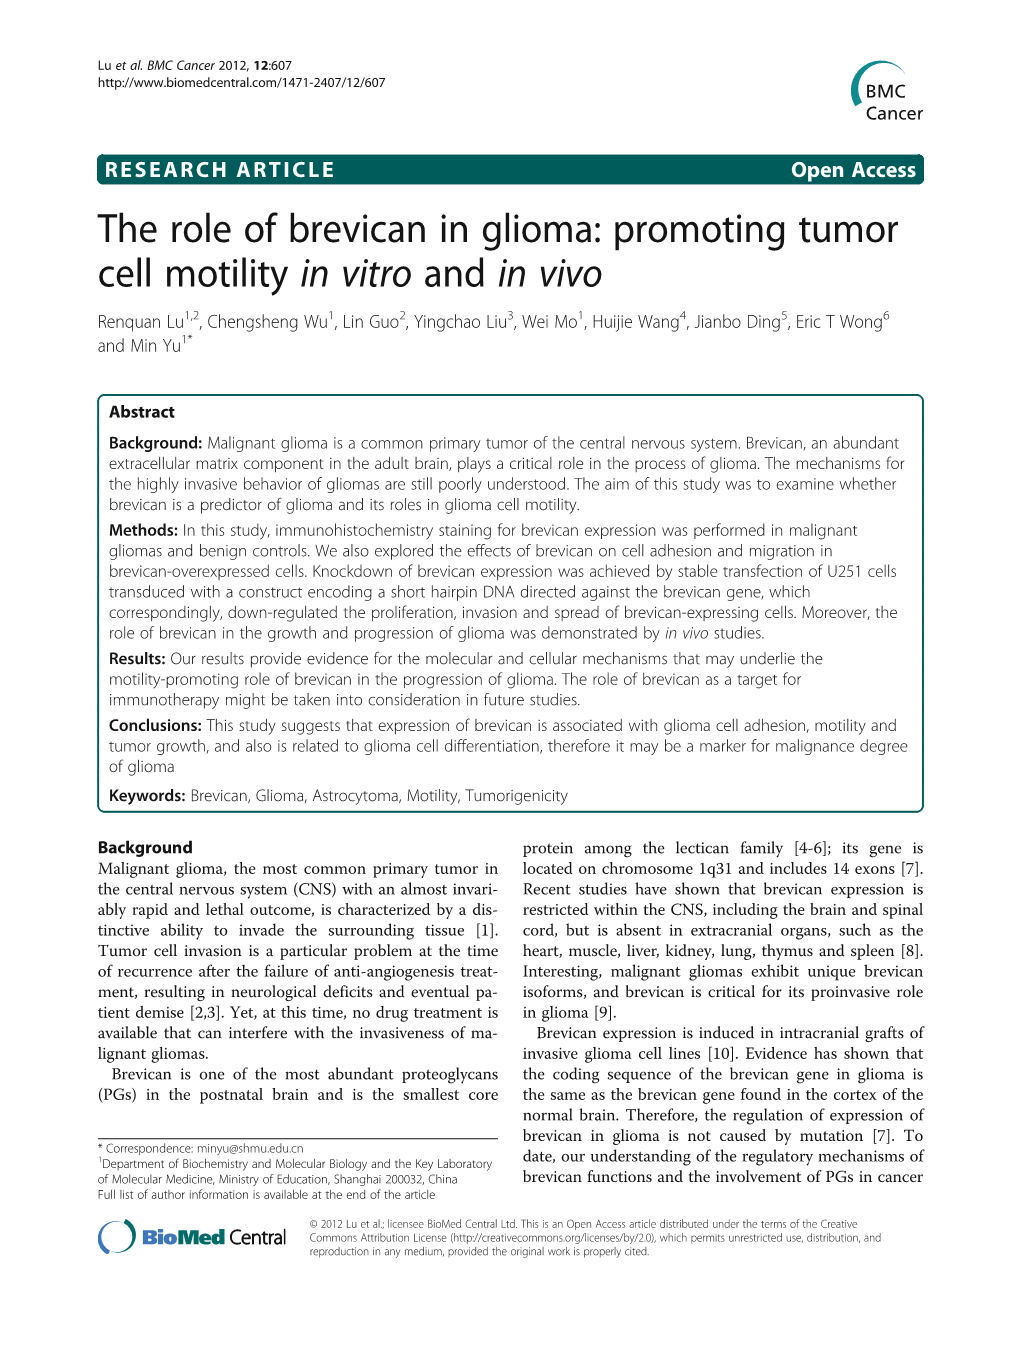 The Role of Brevican in Glioma